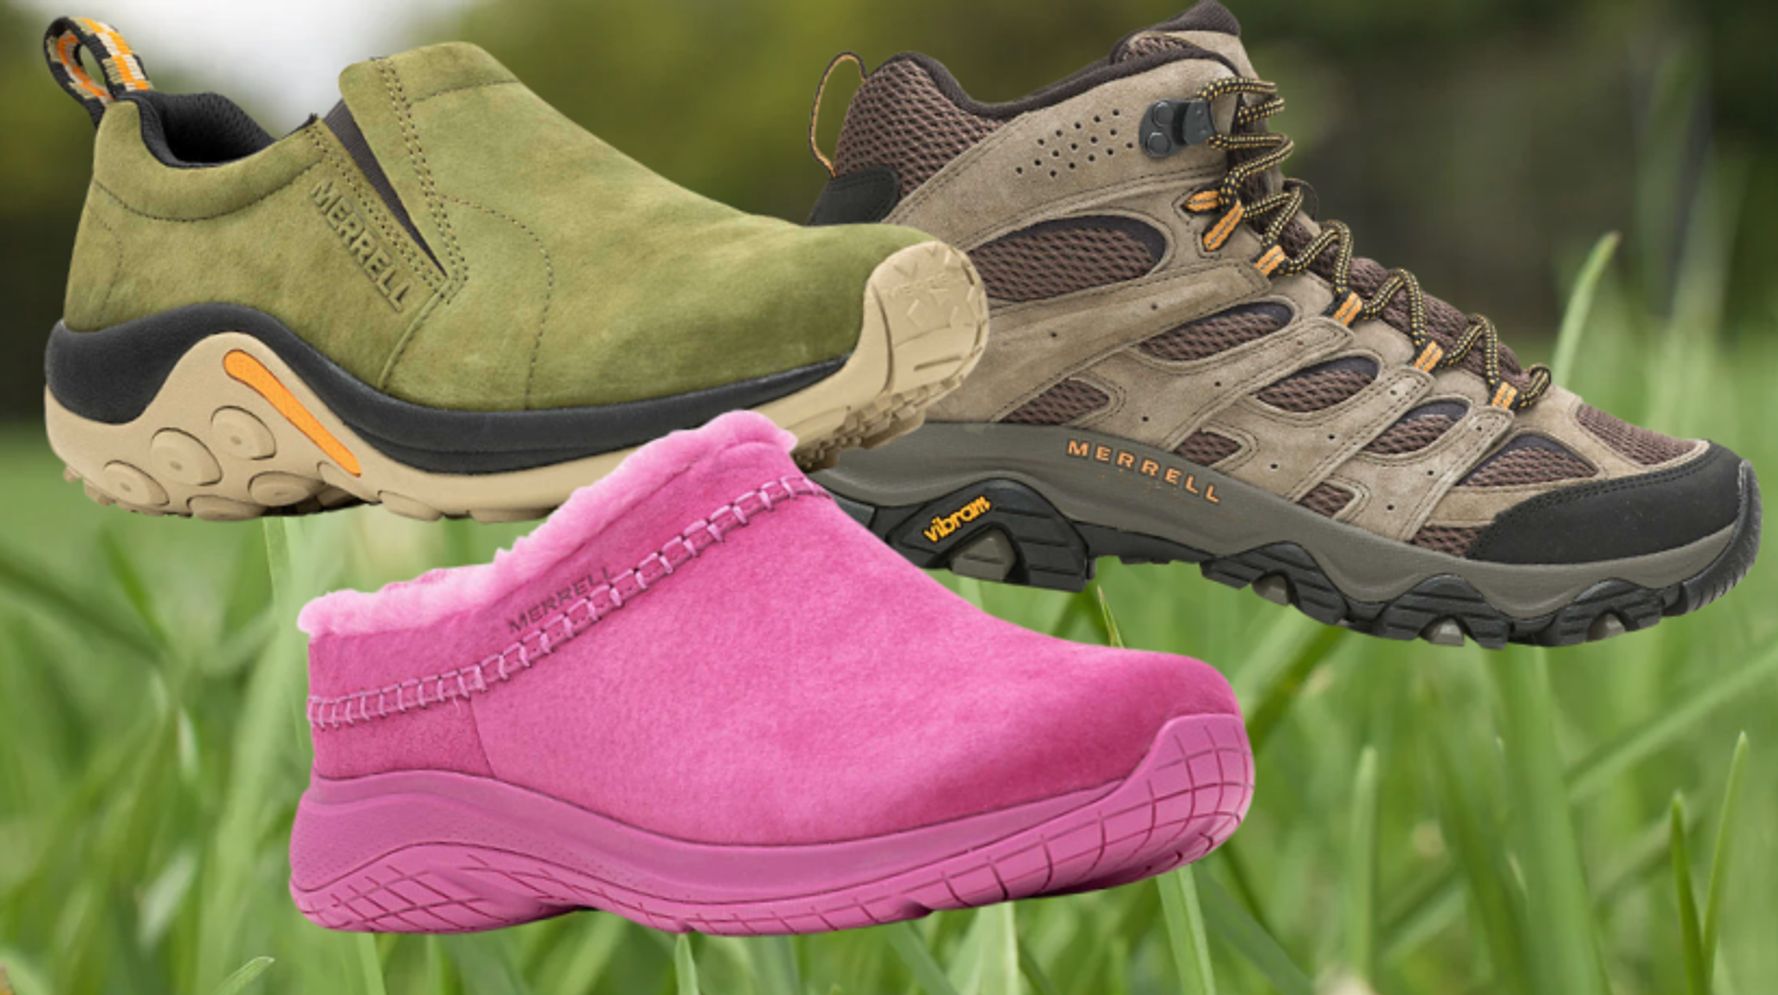 Merrell's Bravada 2 sneaker is built specifically for women hikers